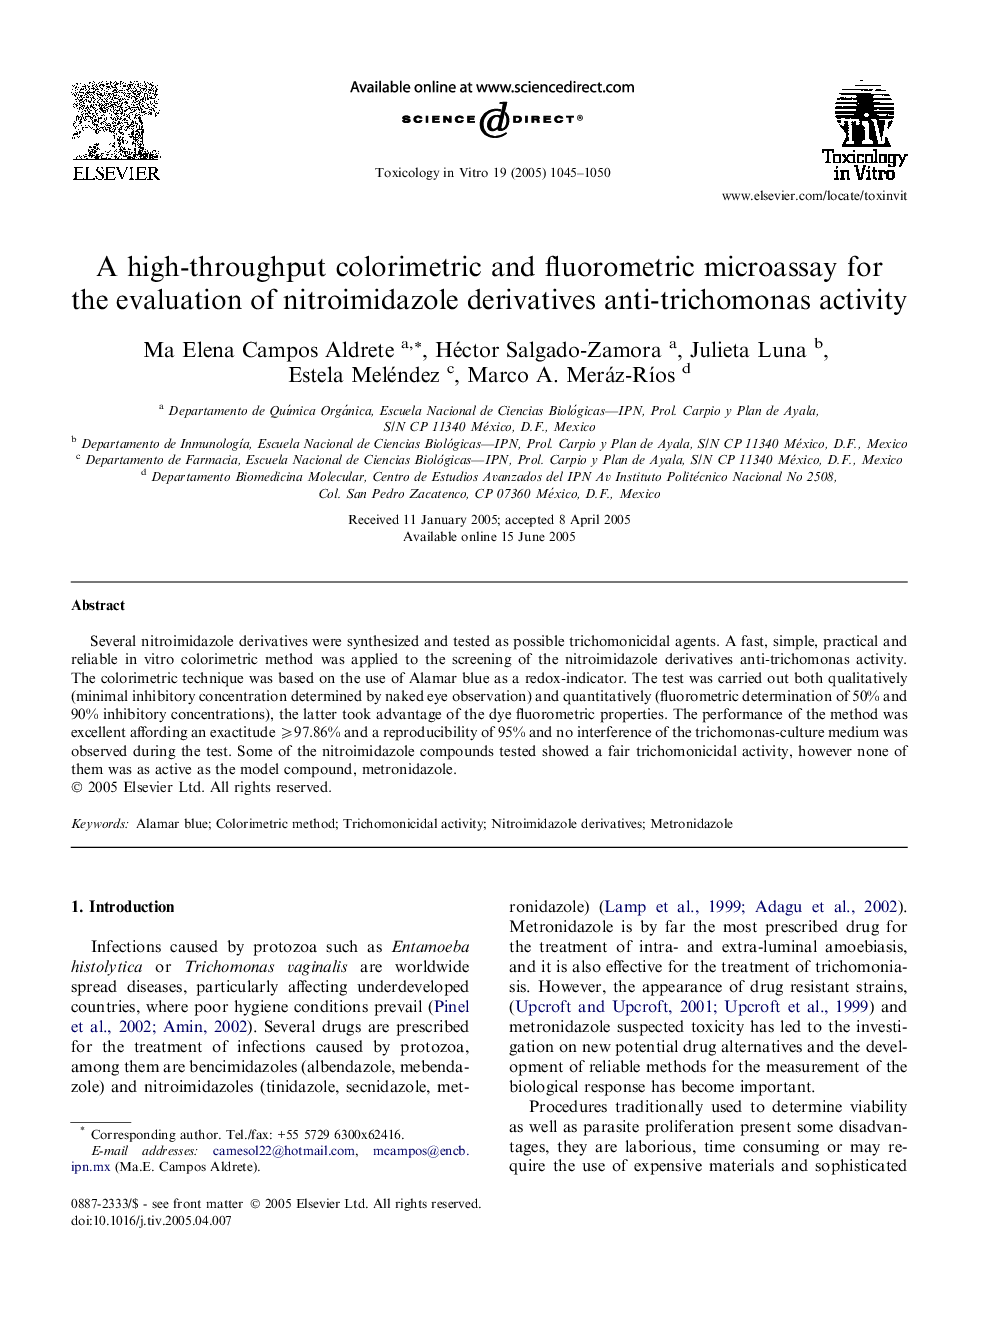 A high-throughput colorimetric and fluorometric microassay for the evaluation of nitroimidazole derivatives anti-trichomonas activity